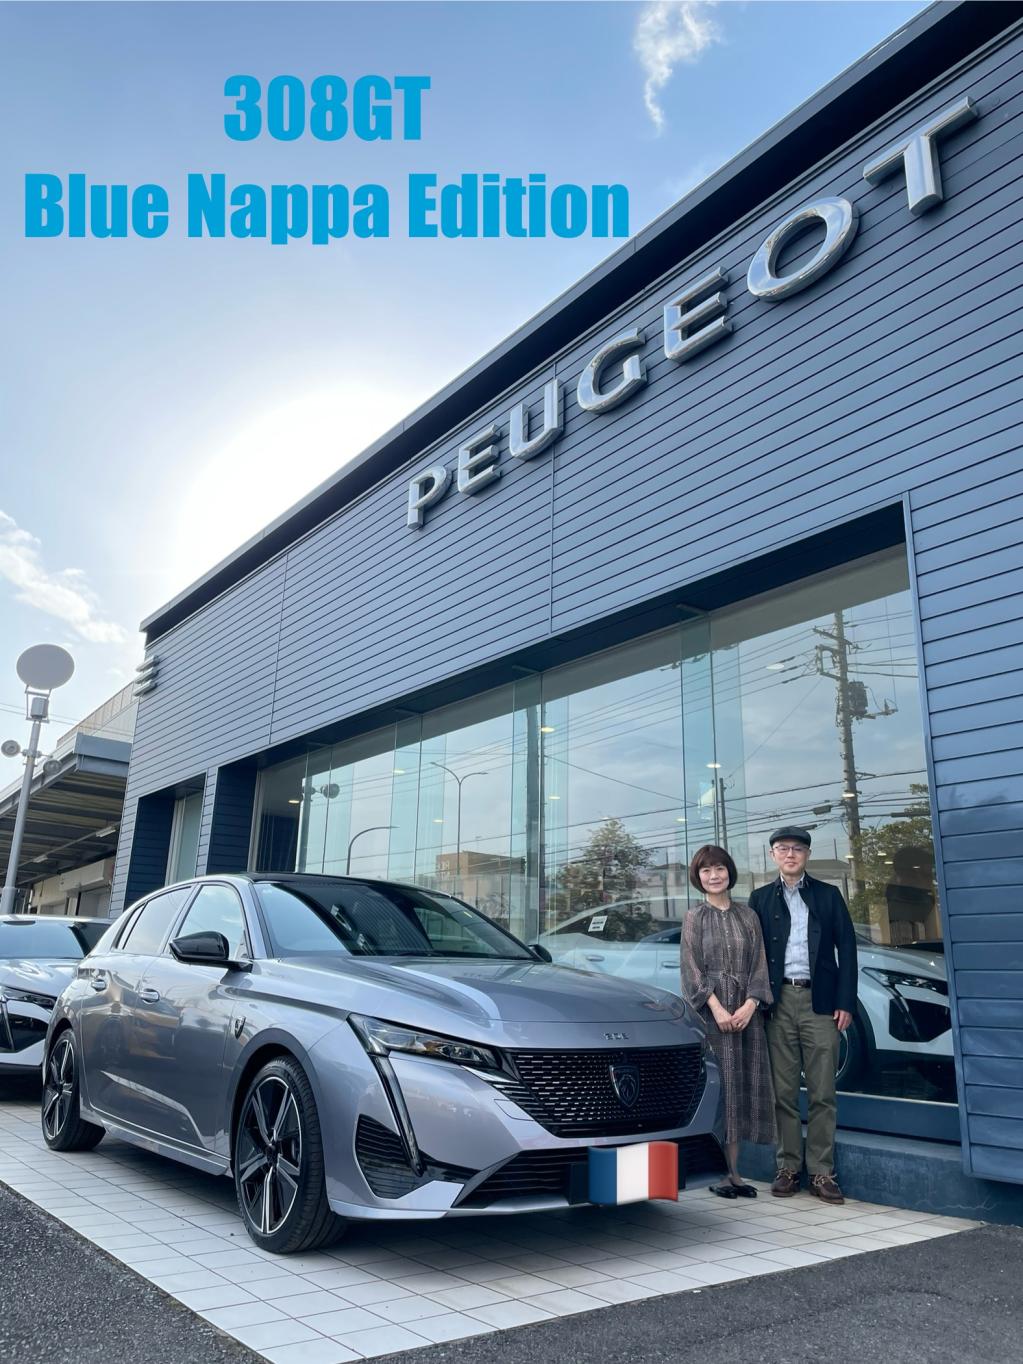 308GT Blue Nappa Edition ご納車